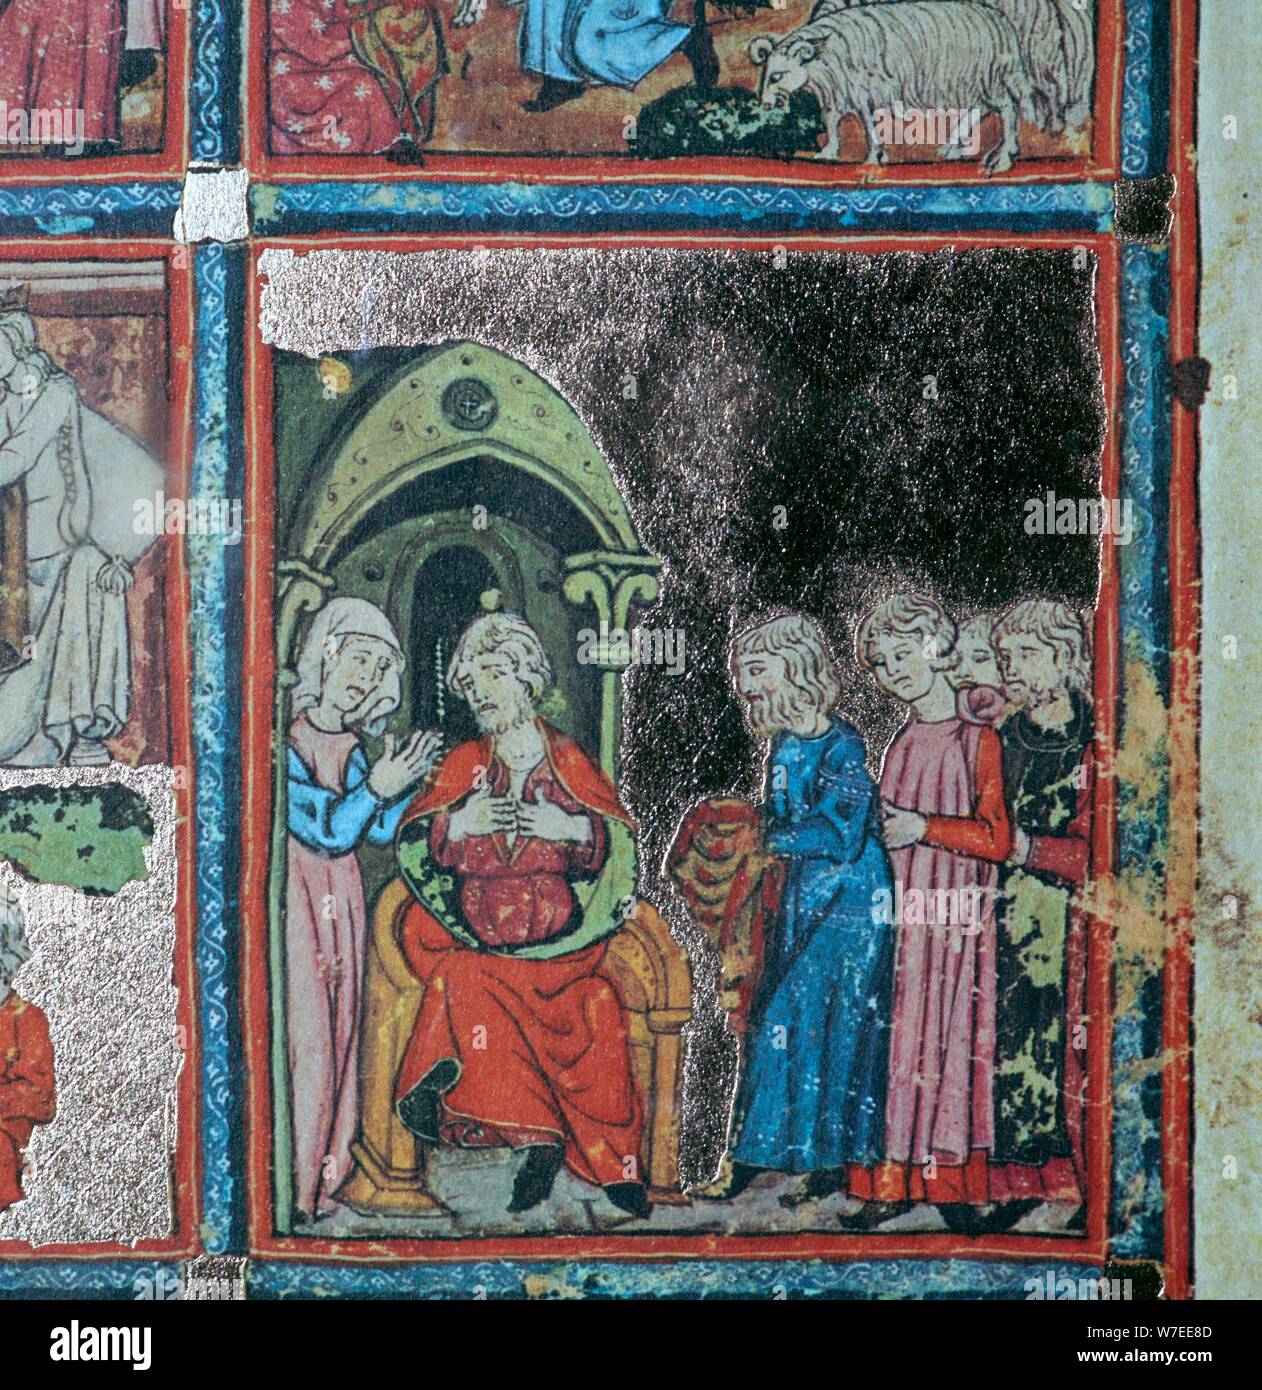 Illustration from the Golden Haggadah, 15th century. Artist: Unknown Stock Photo